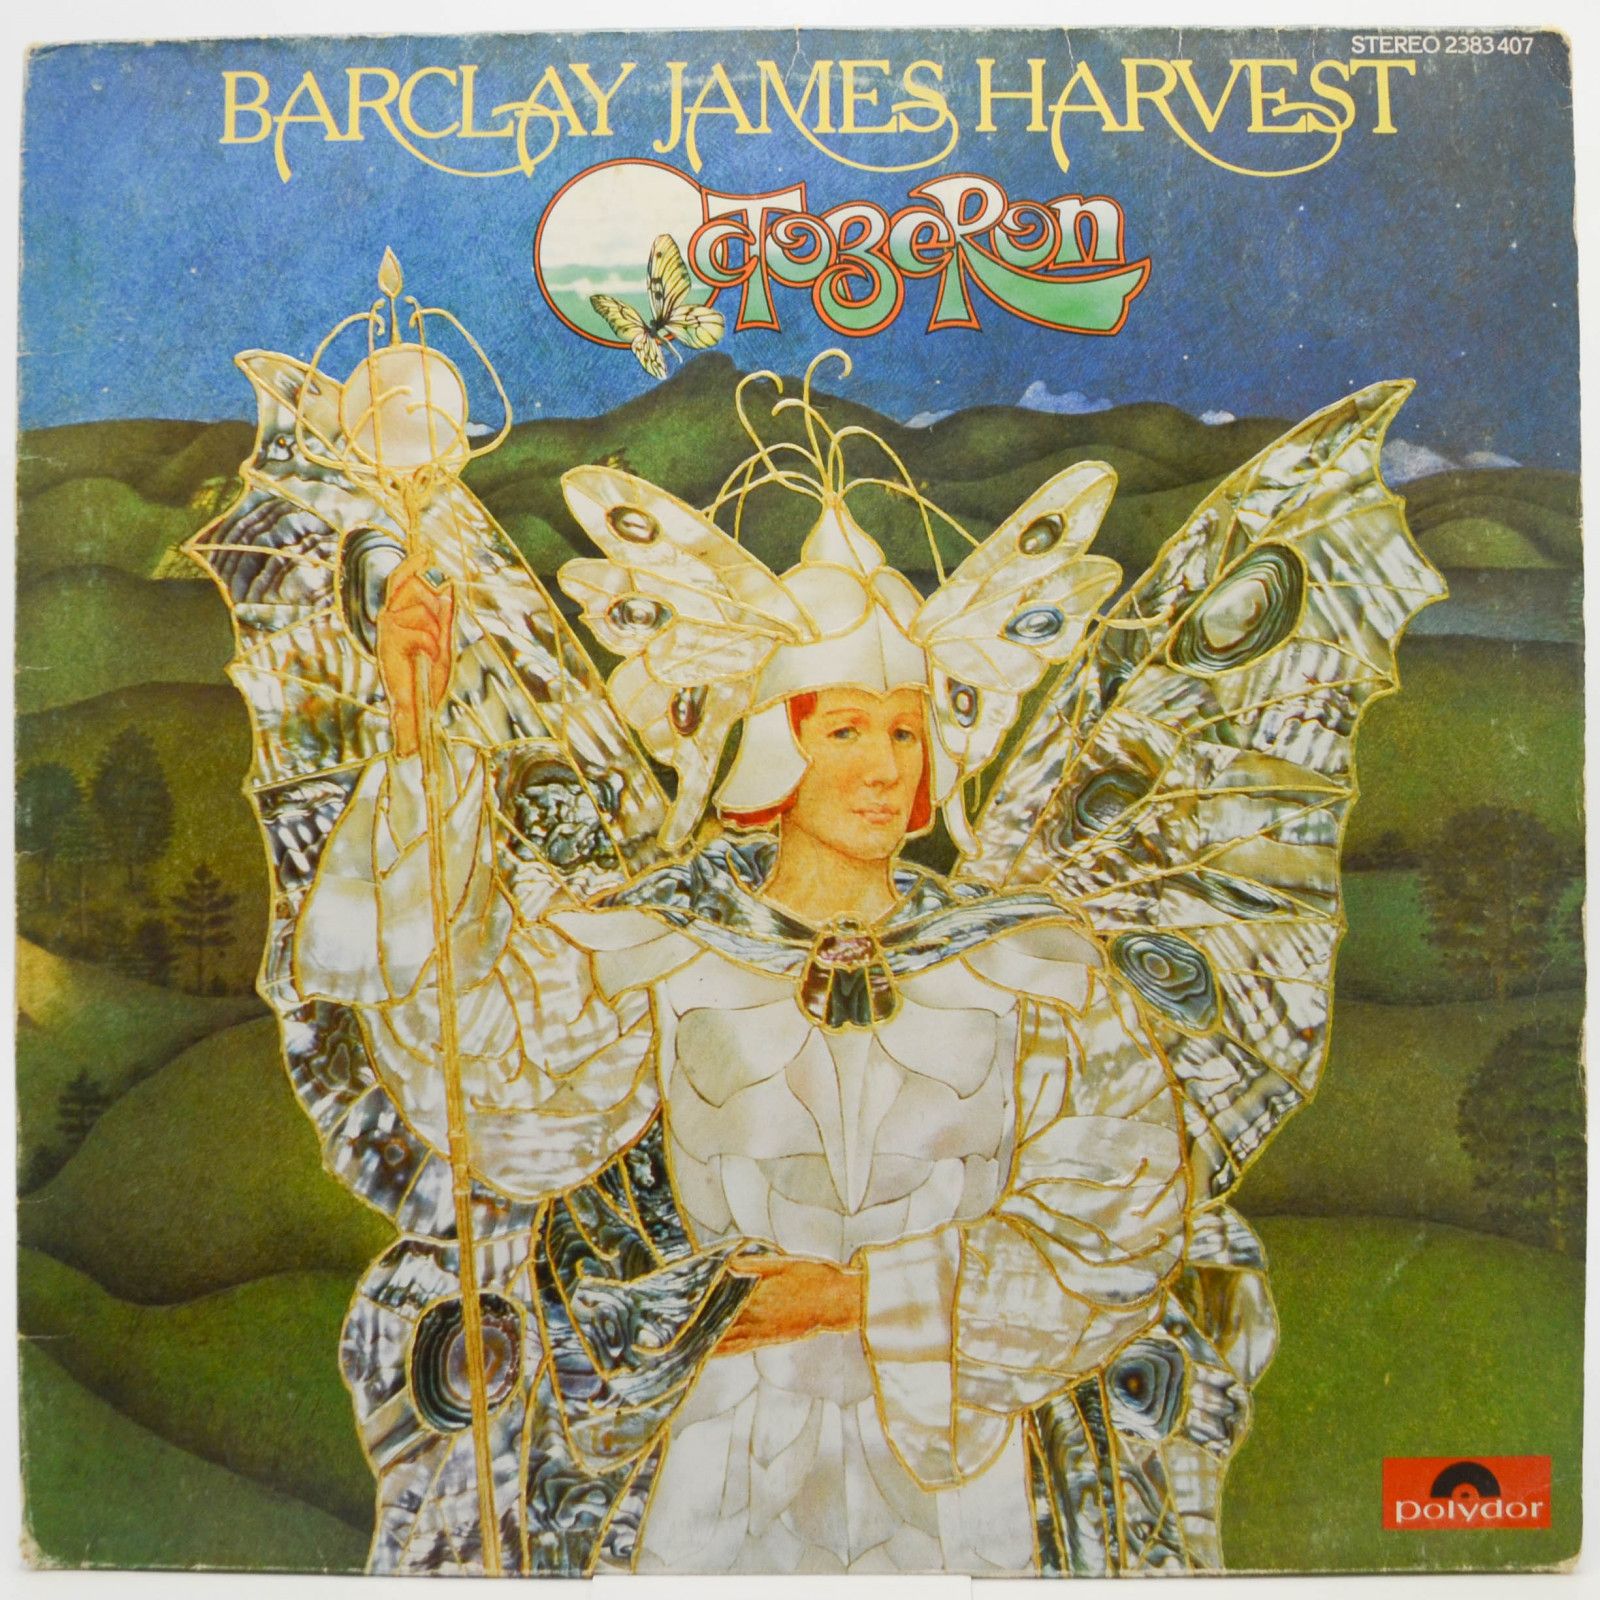 Barclay James Harvest — Octoberon, 1976